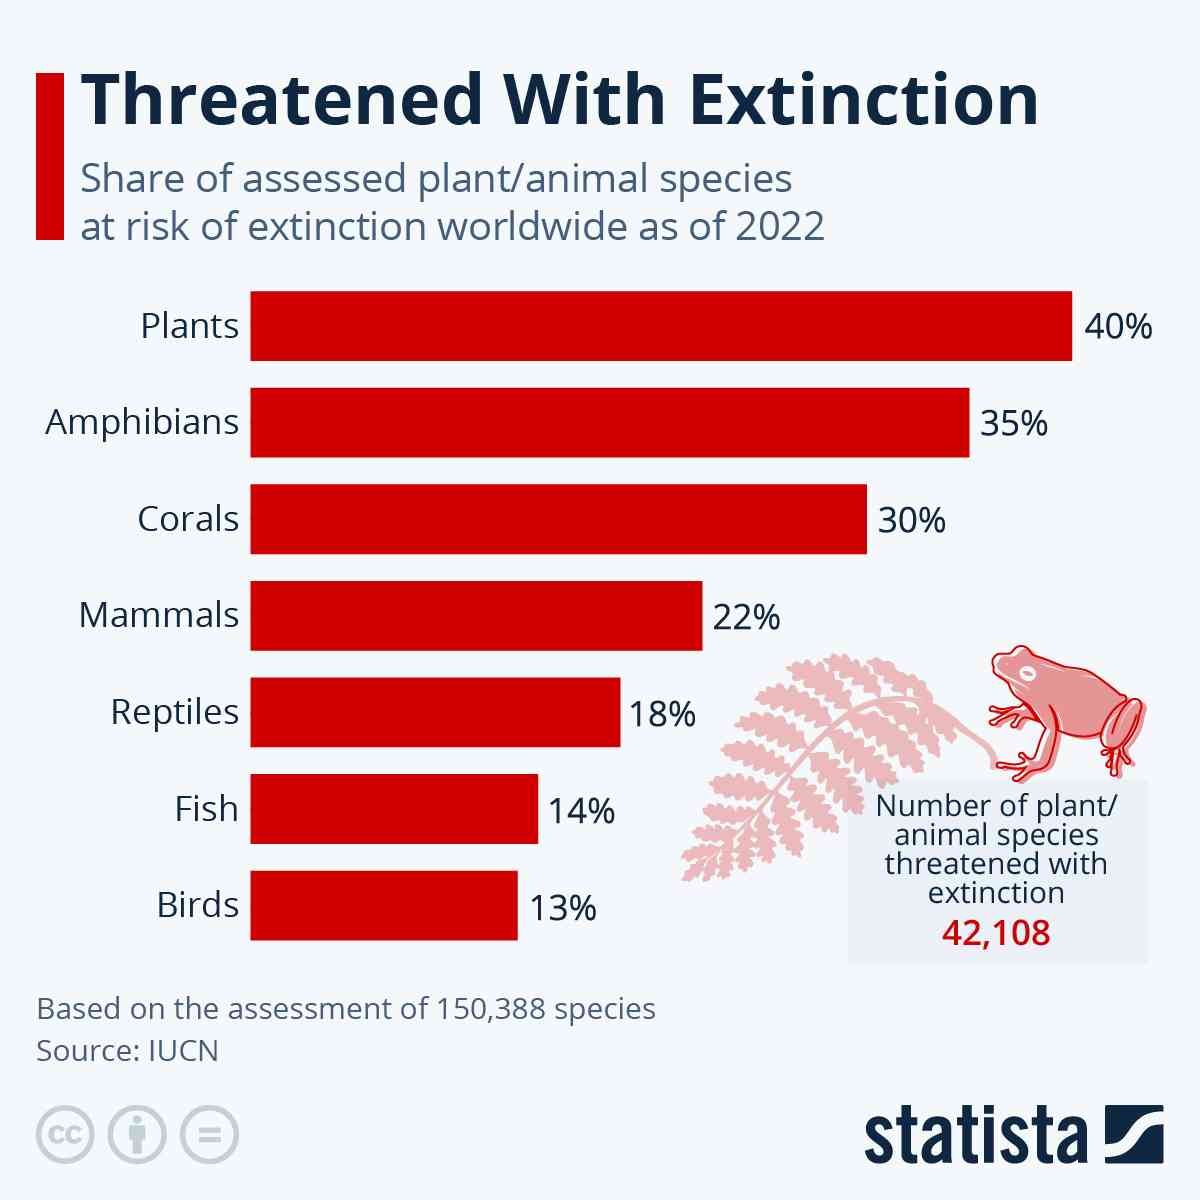 biodiversity built environment 42108 species threatened with extinction